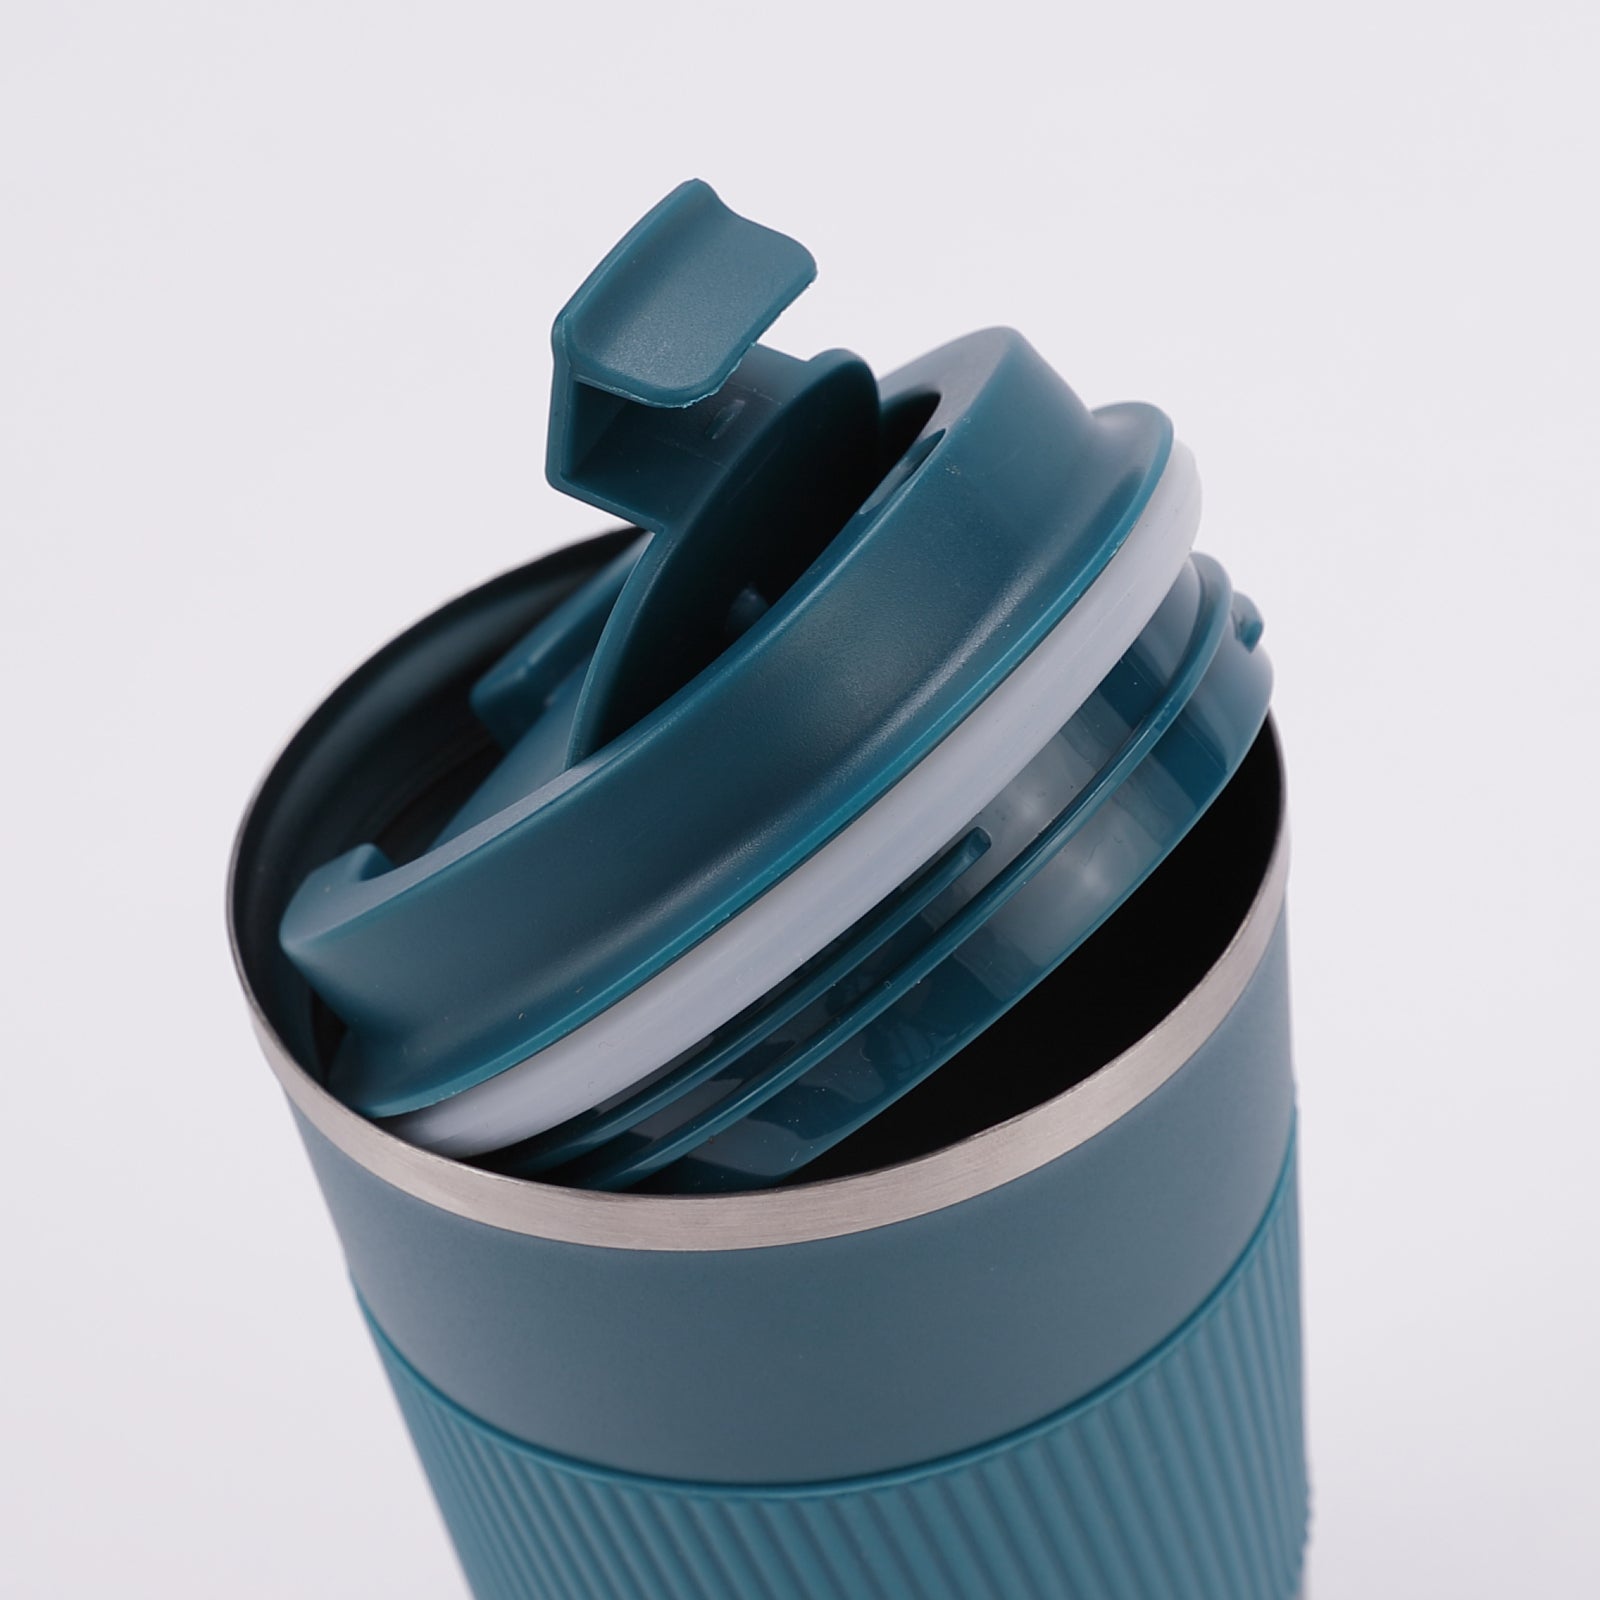 Stainless Steel Insulated Coffee Mug with Sleeve - Blue - 380ml - Rage Coffee